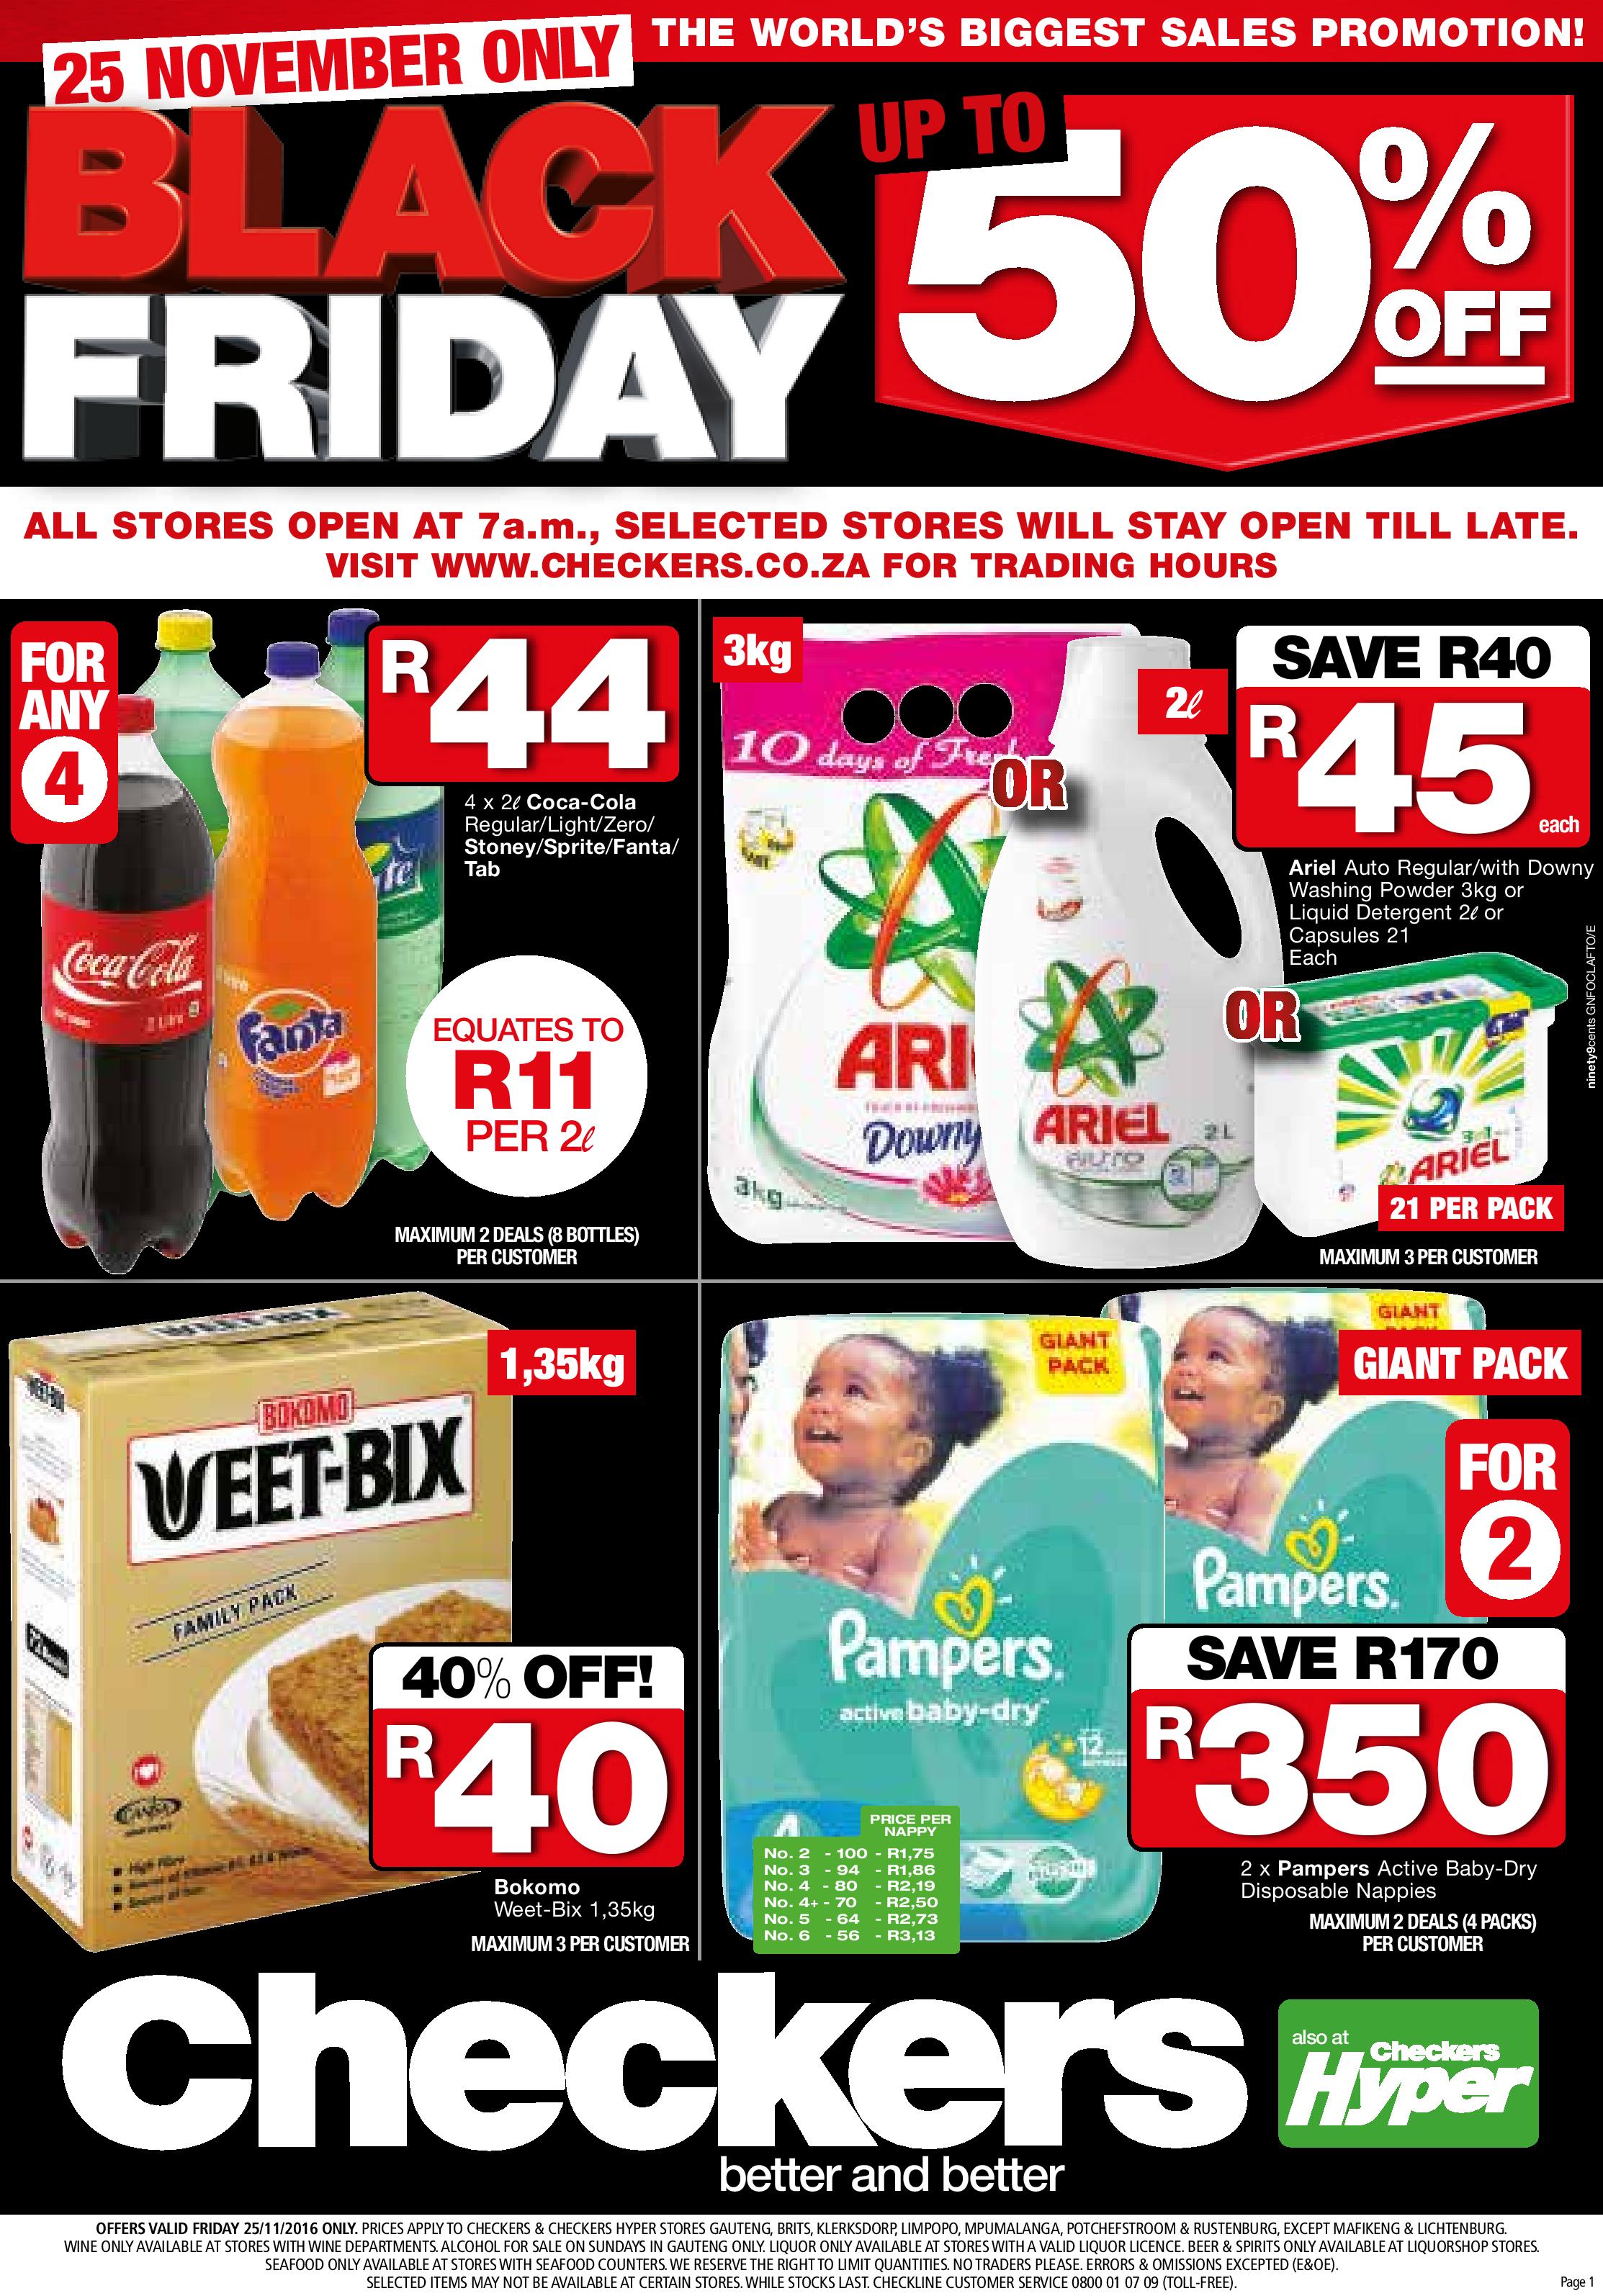 #BlackFriday: Checkers Black Friday Gauteng (Pics and PDF) - Online Scoops